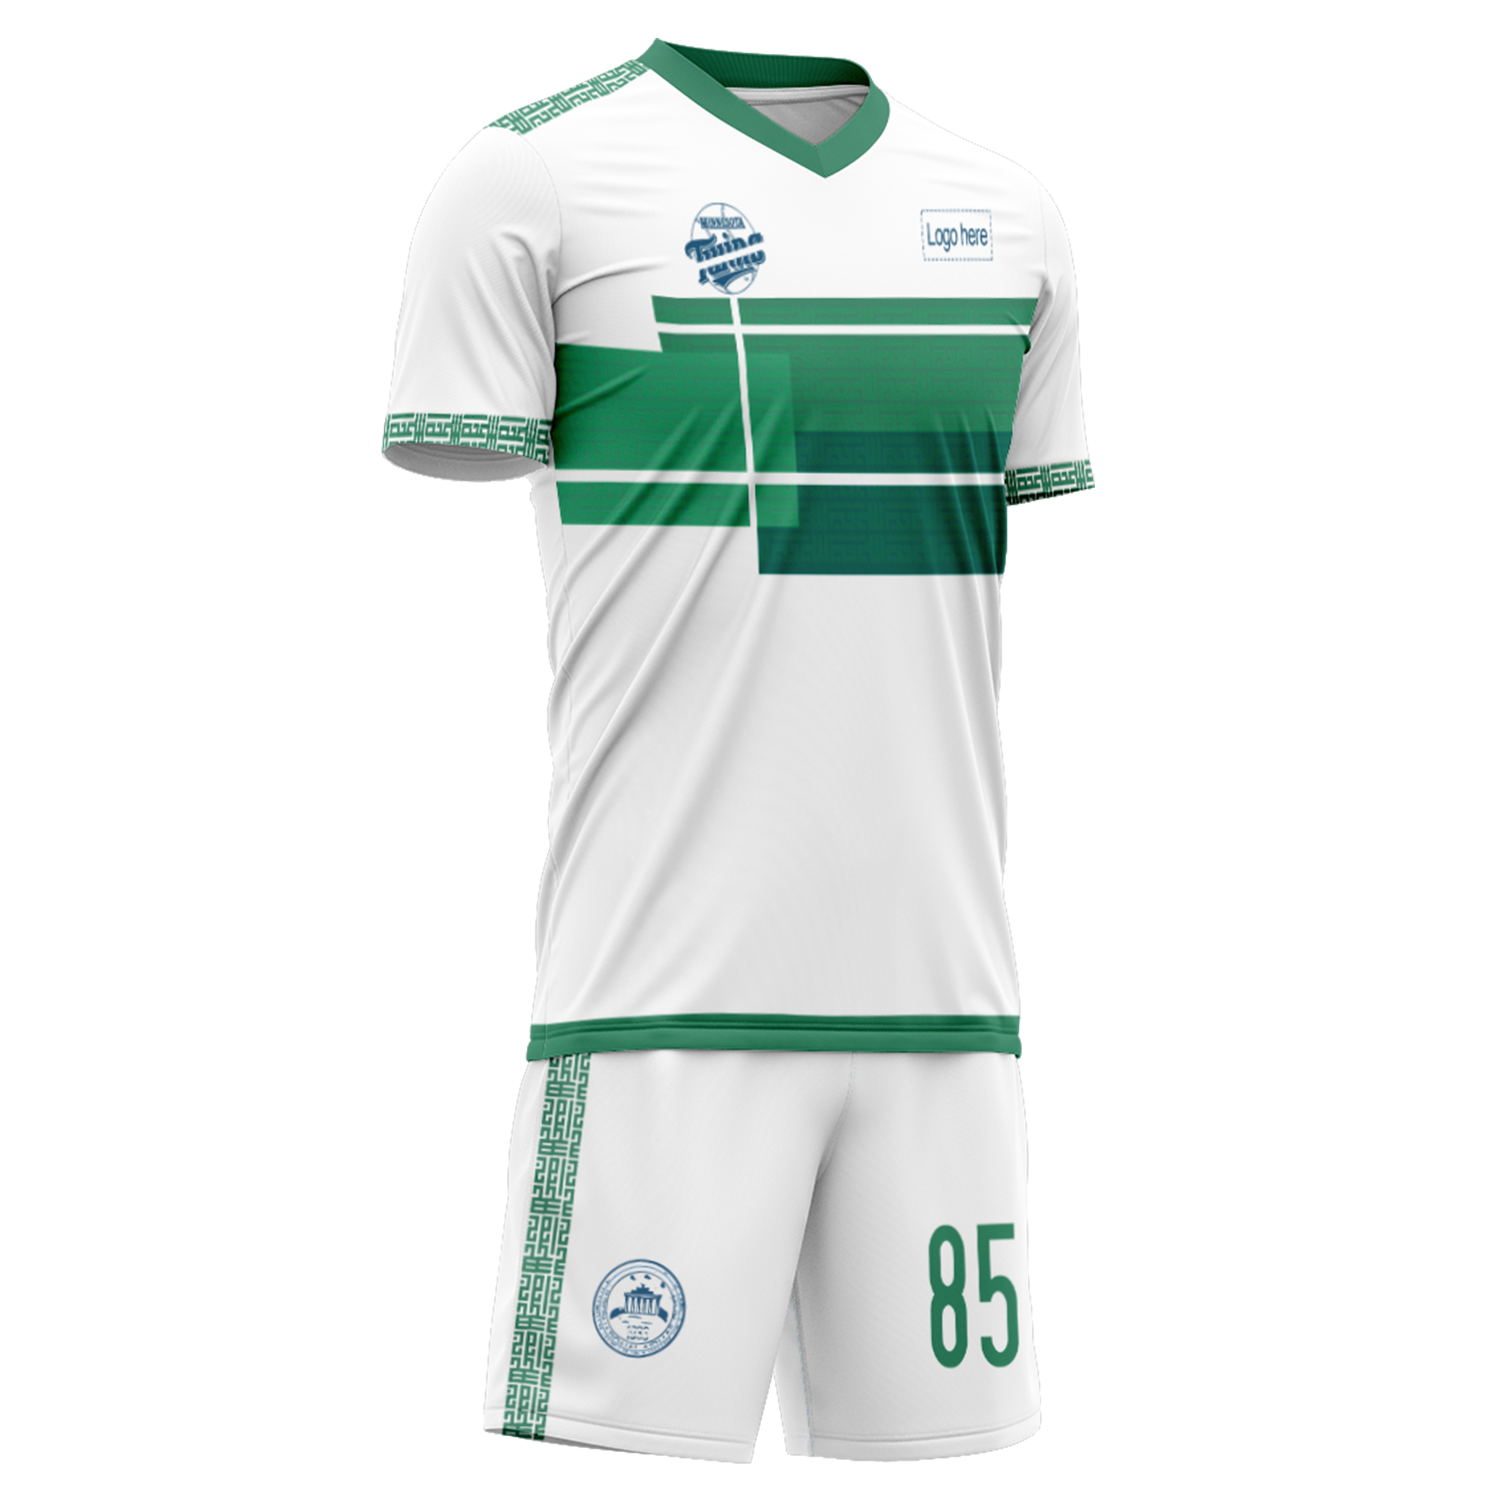 Custom Iran Team Football Suits Personalized Design Print on Demand Soccer Jerseys